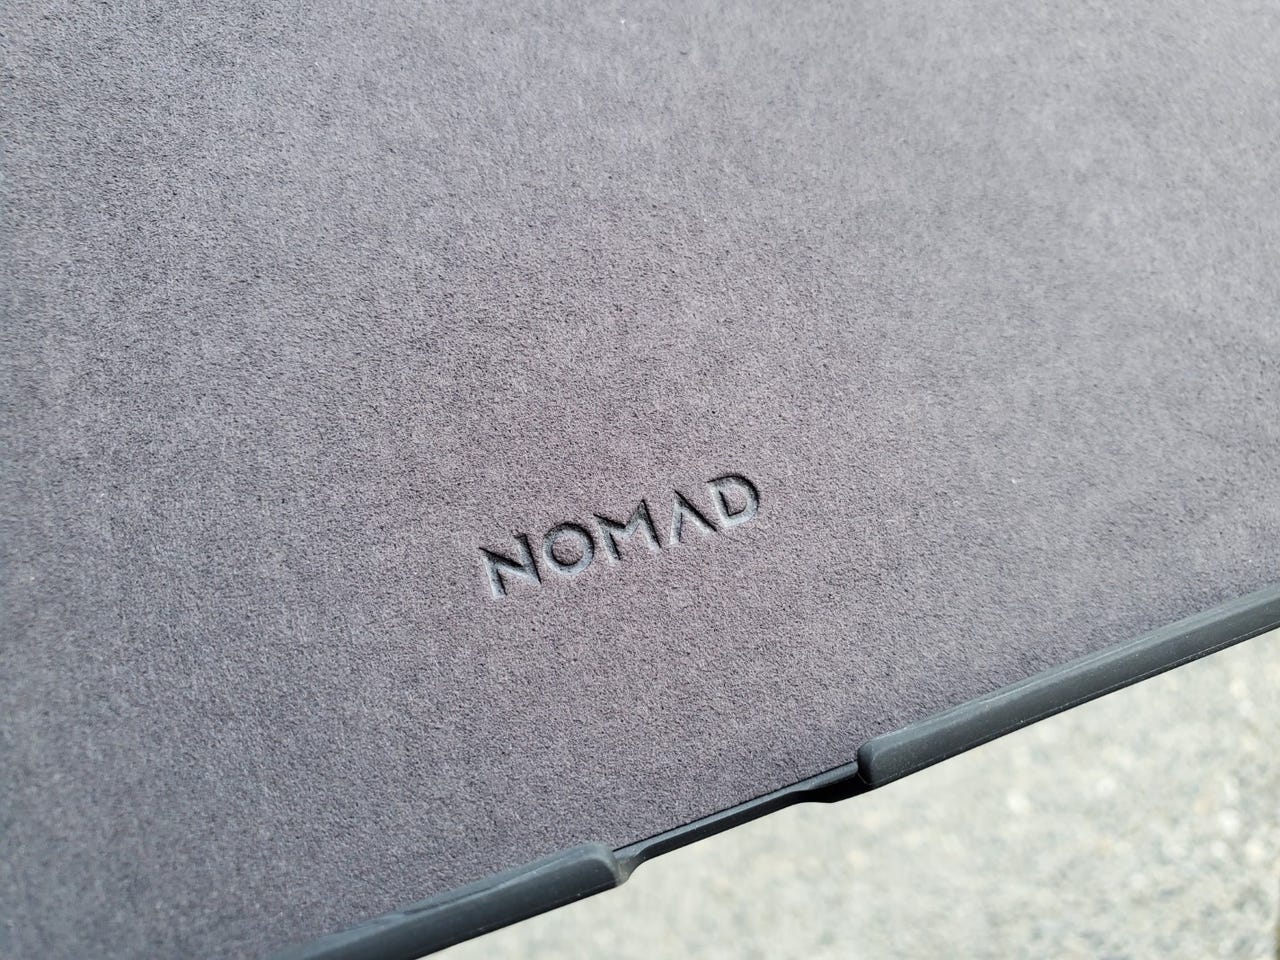 nomad-ipad-129-pro-11.jpg